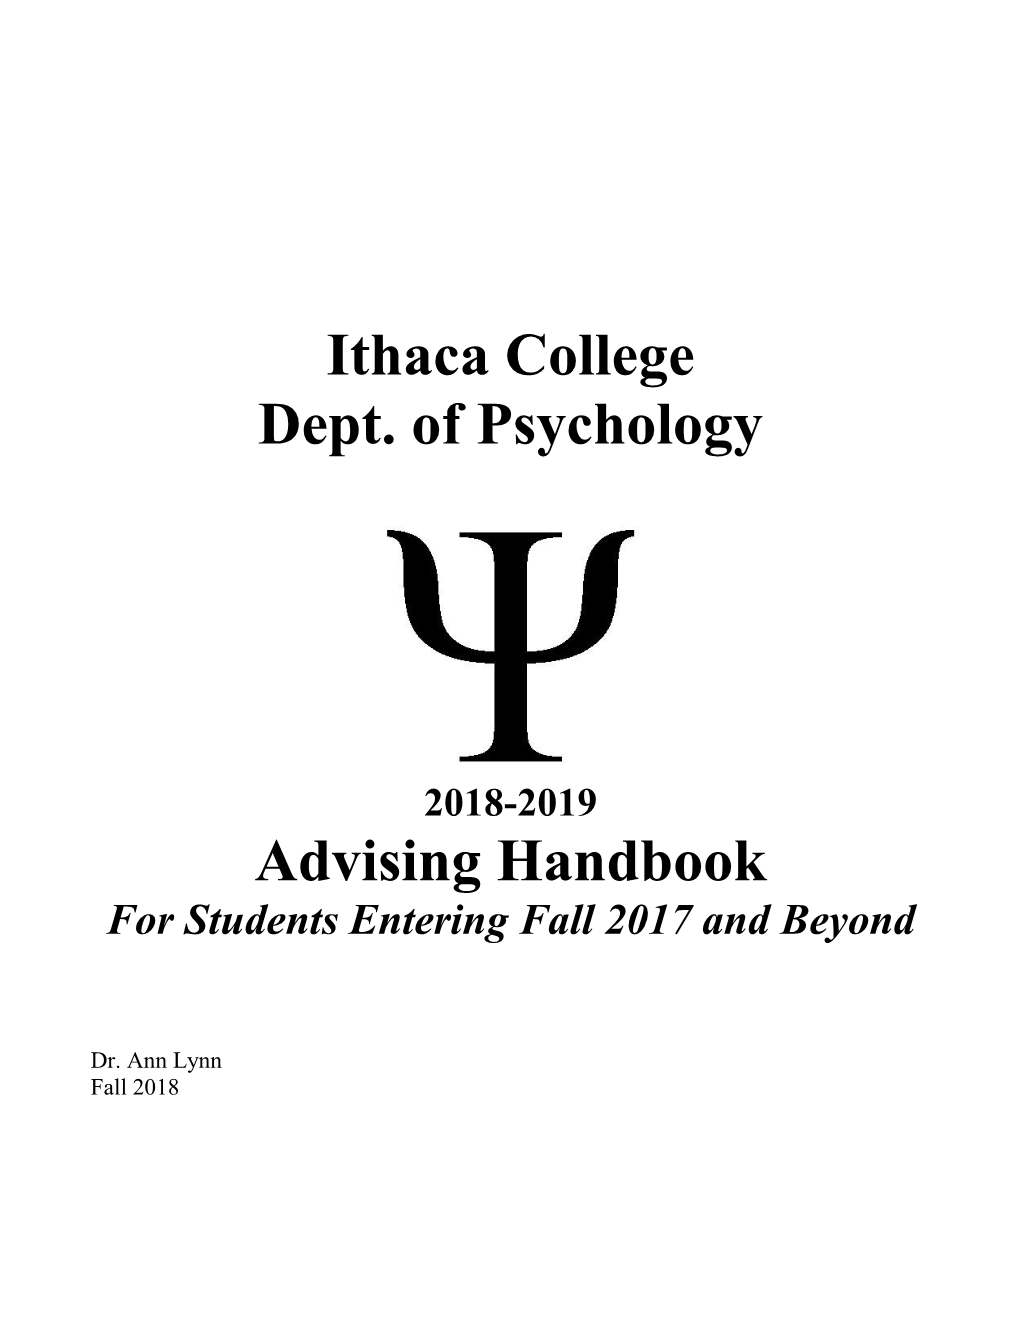 Ithaca College Dept. of Psychology Advising Handbook